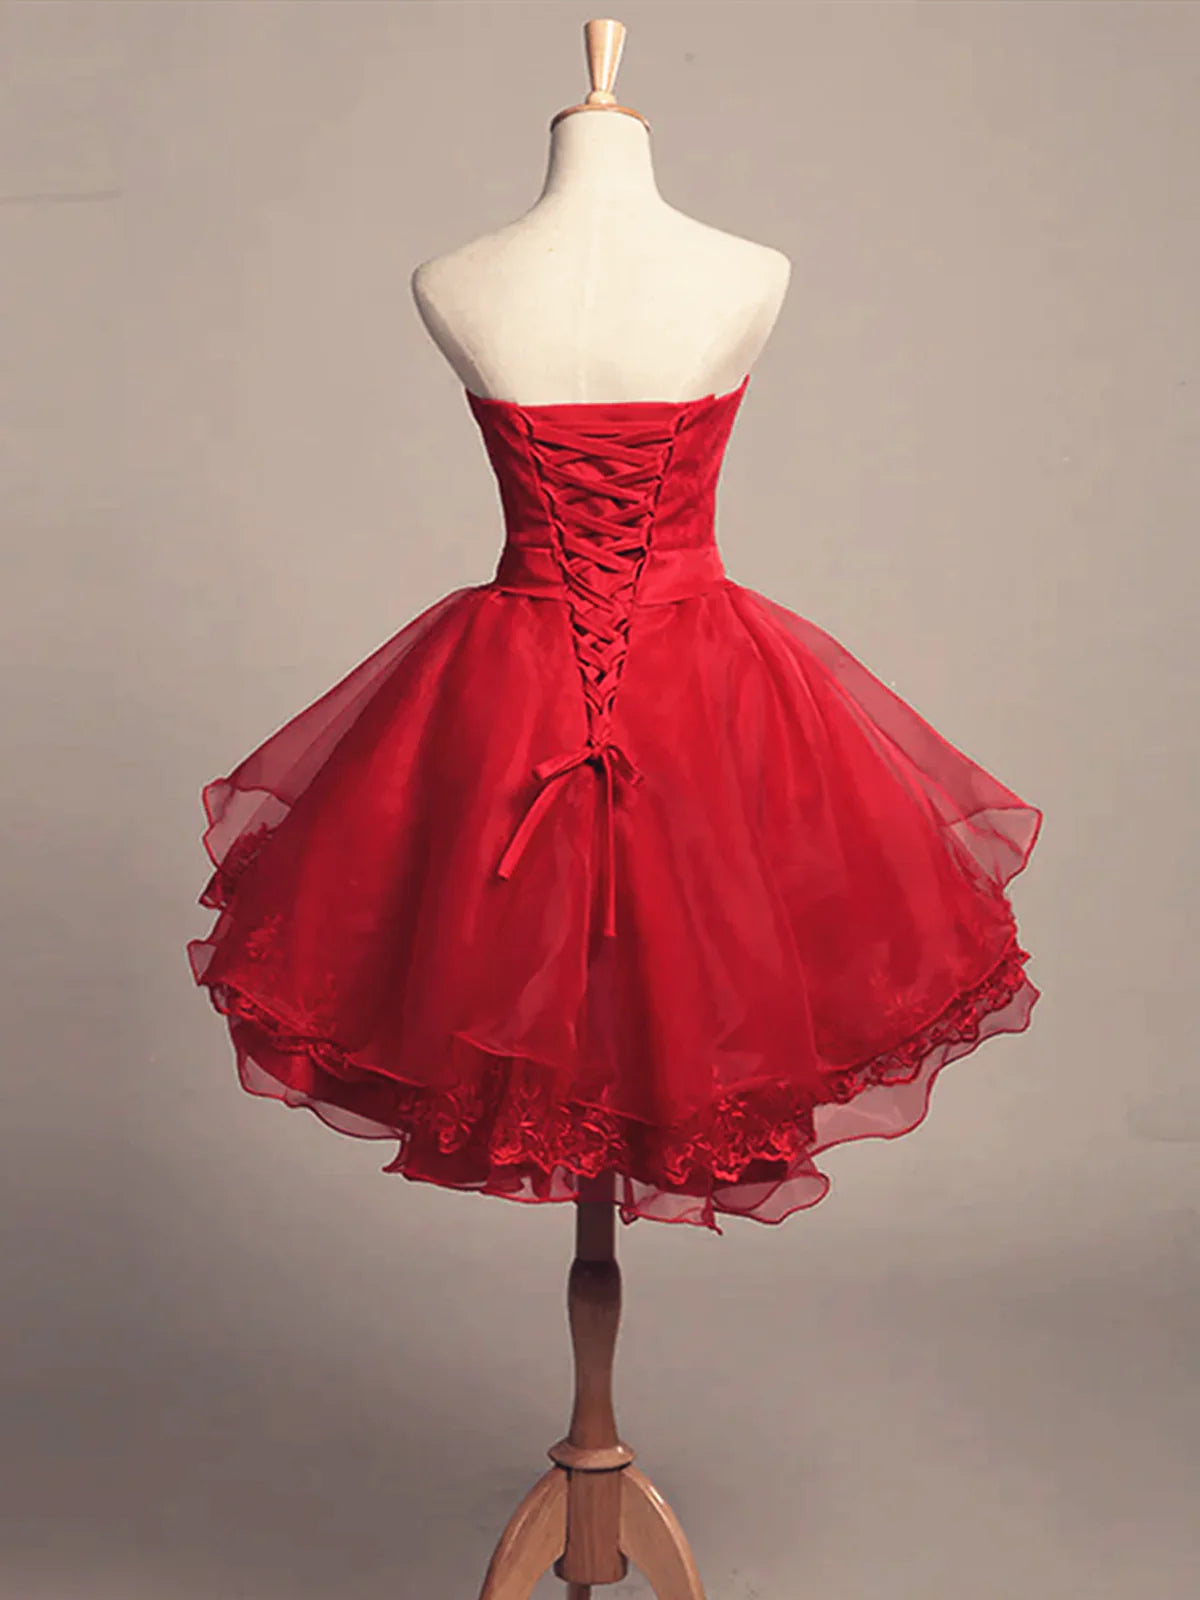 Strapless Short Red Prom Dresses, Short Red Formal Homecoming Dresses